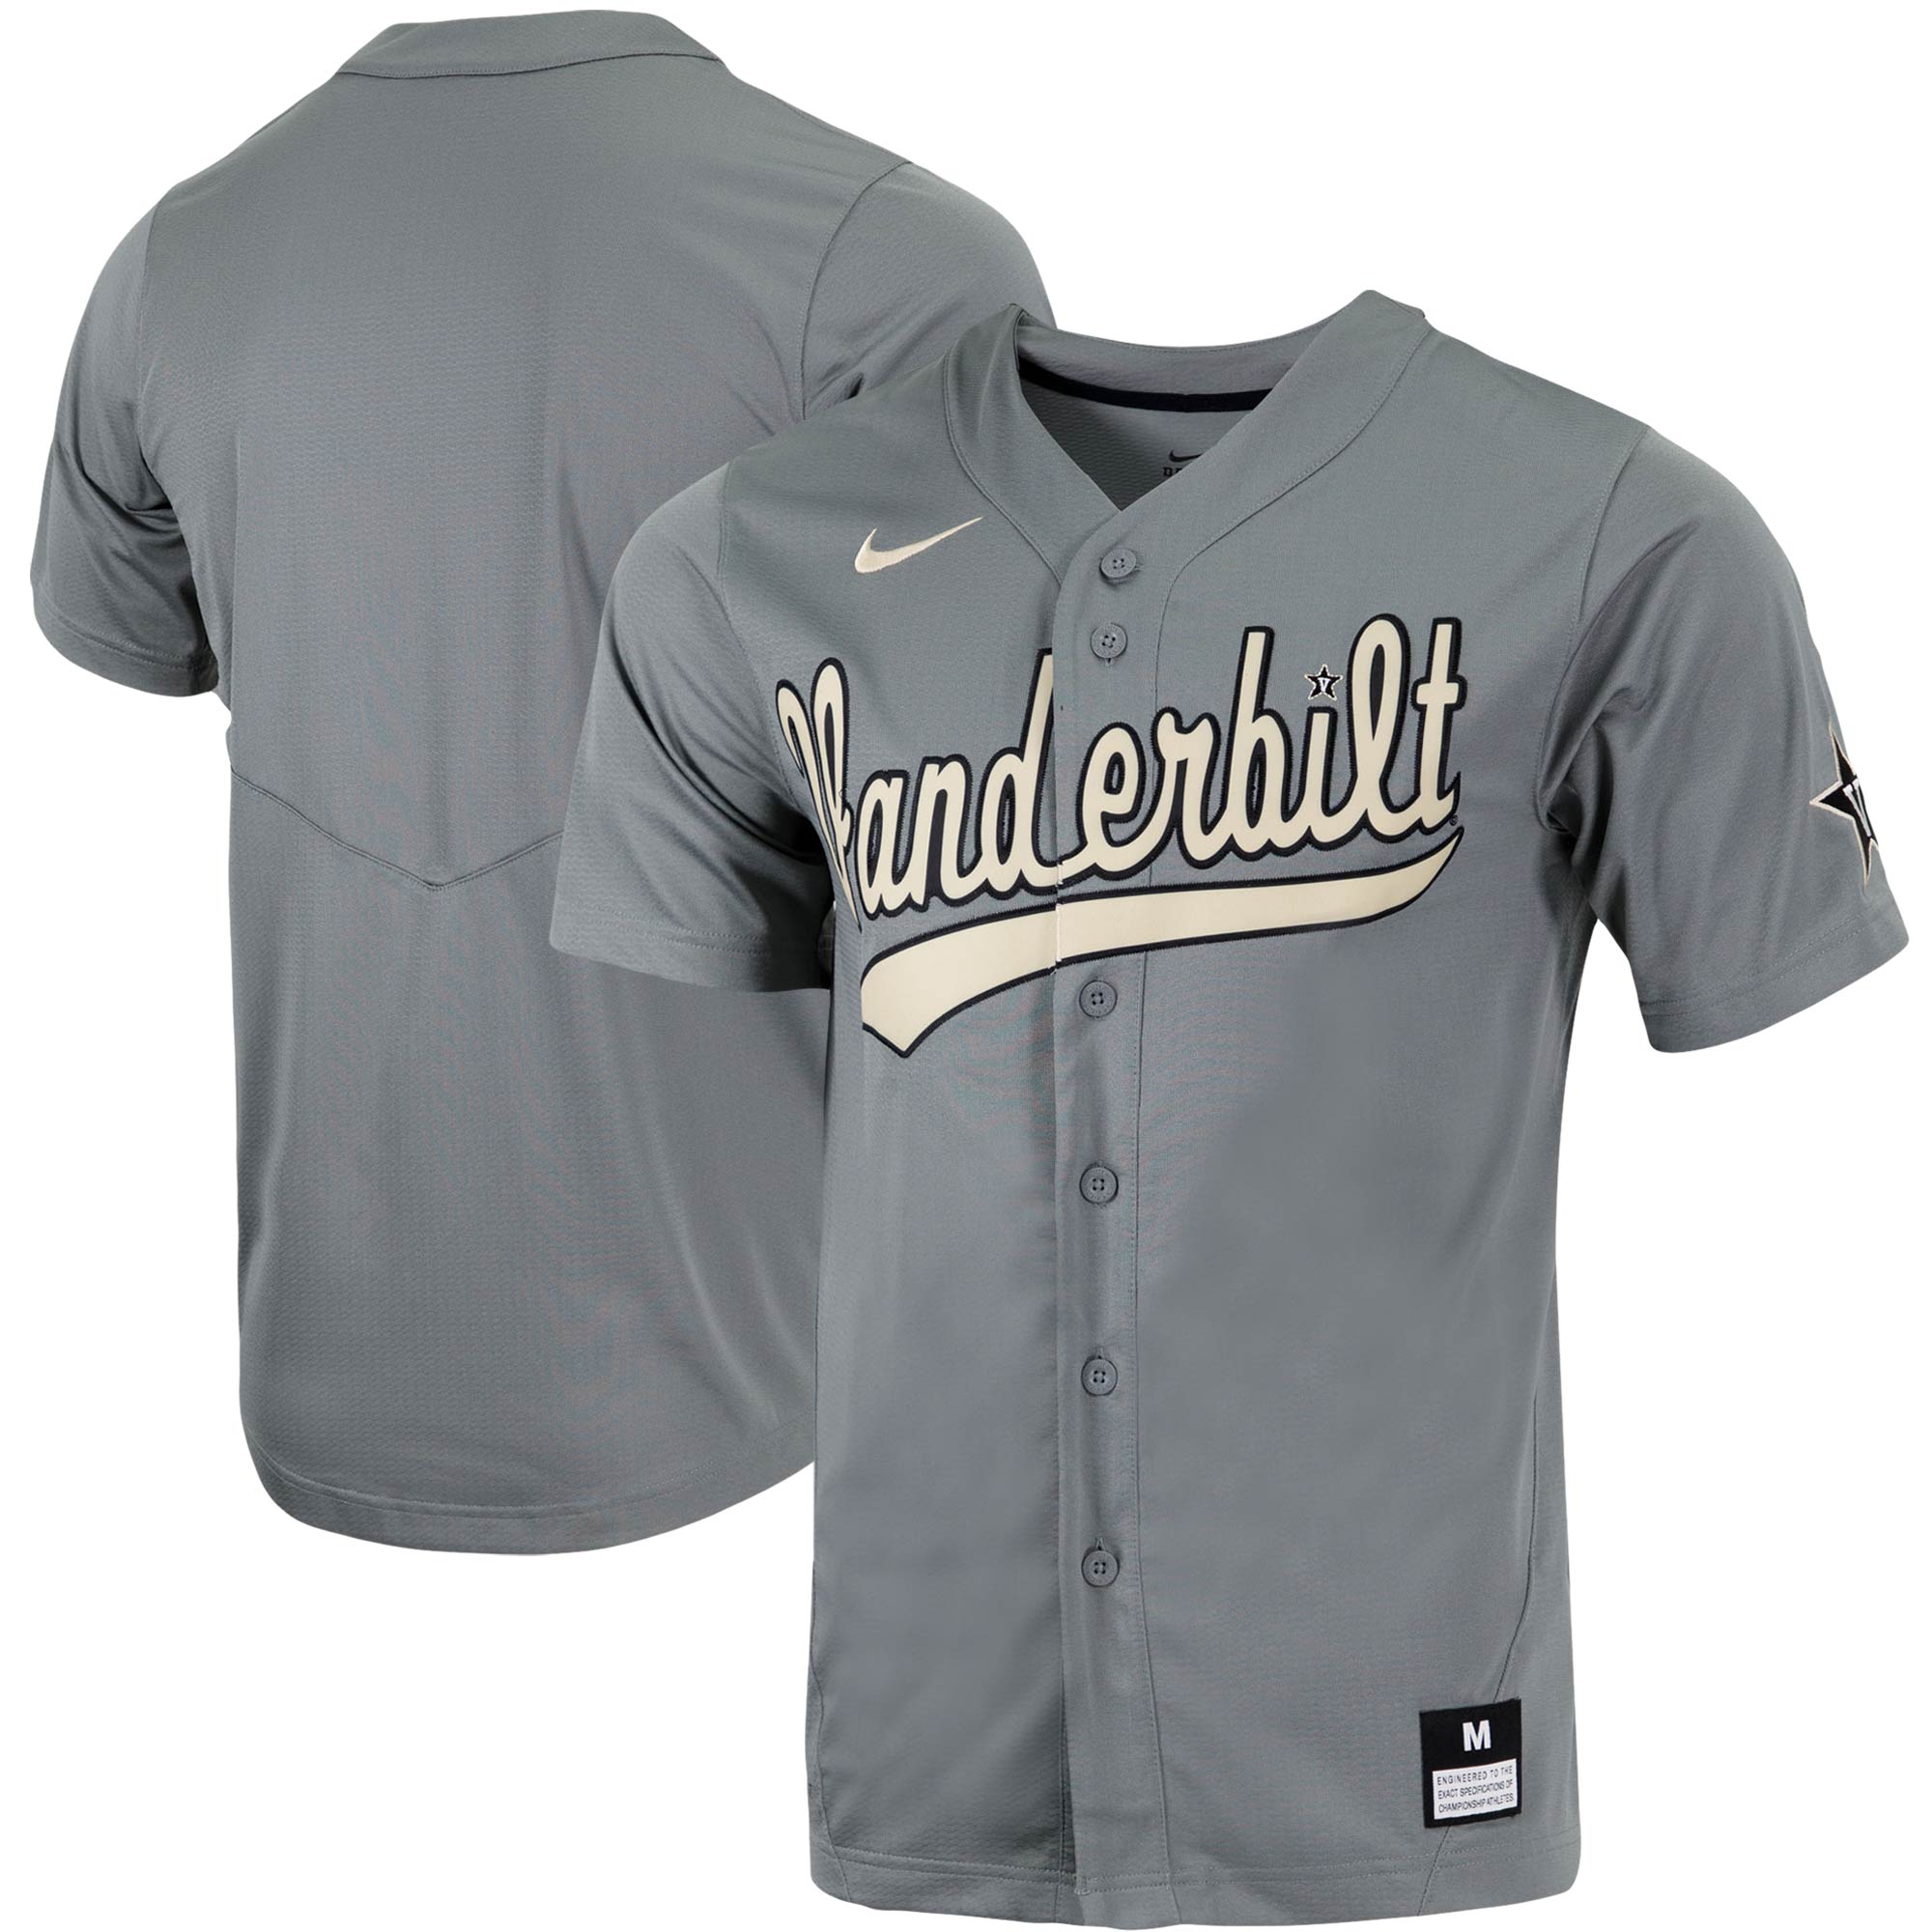 Vanderbilt Commodores Replica Full-Button Baseball Jersey - Charcoal For Youth Women Men